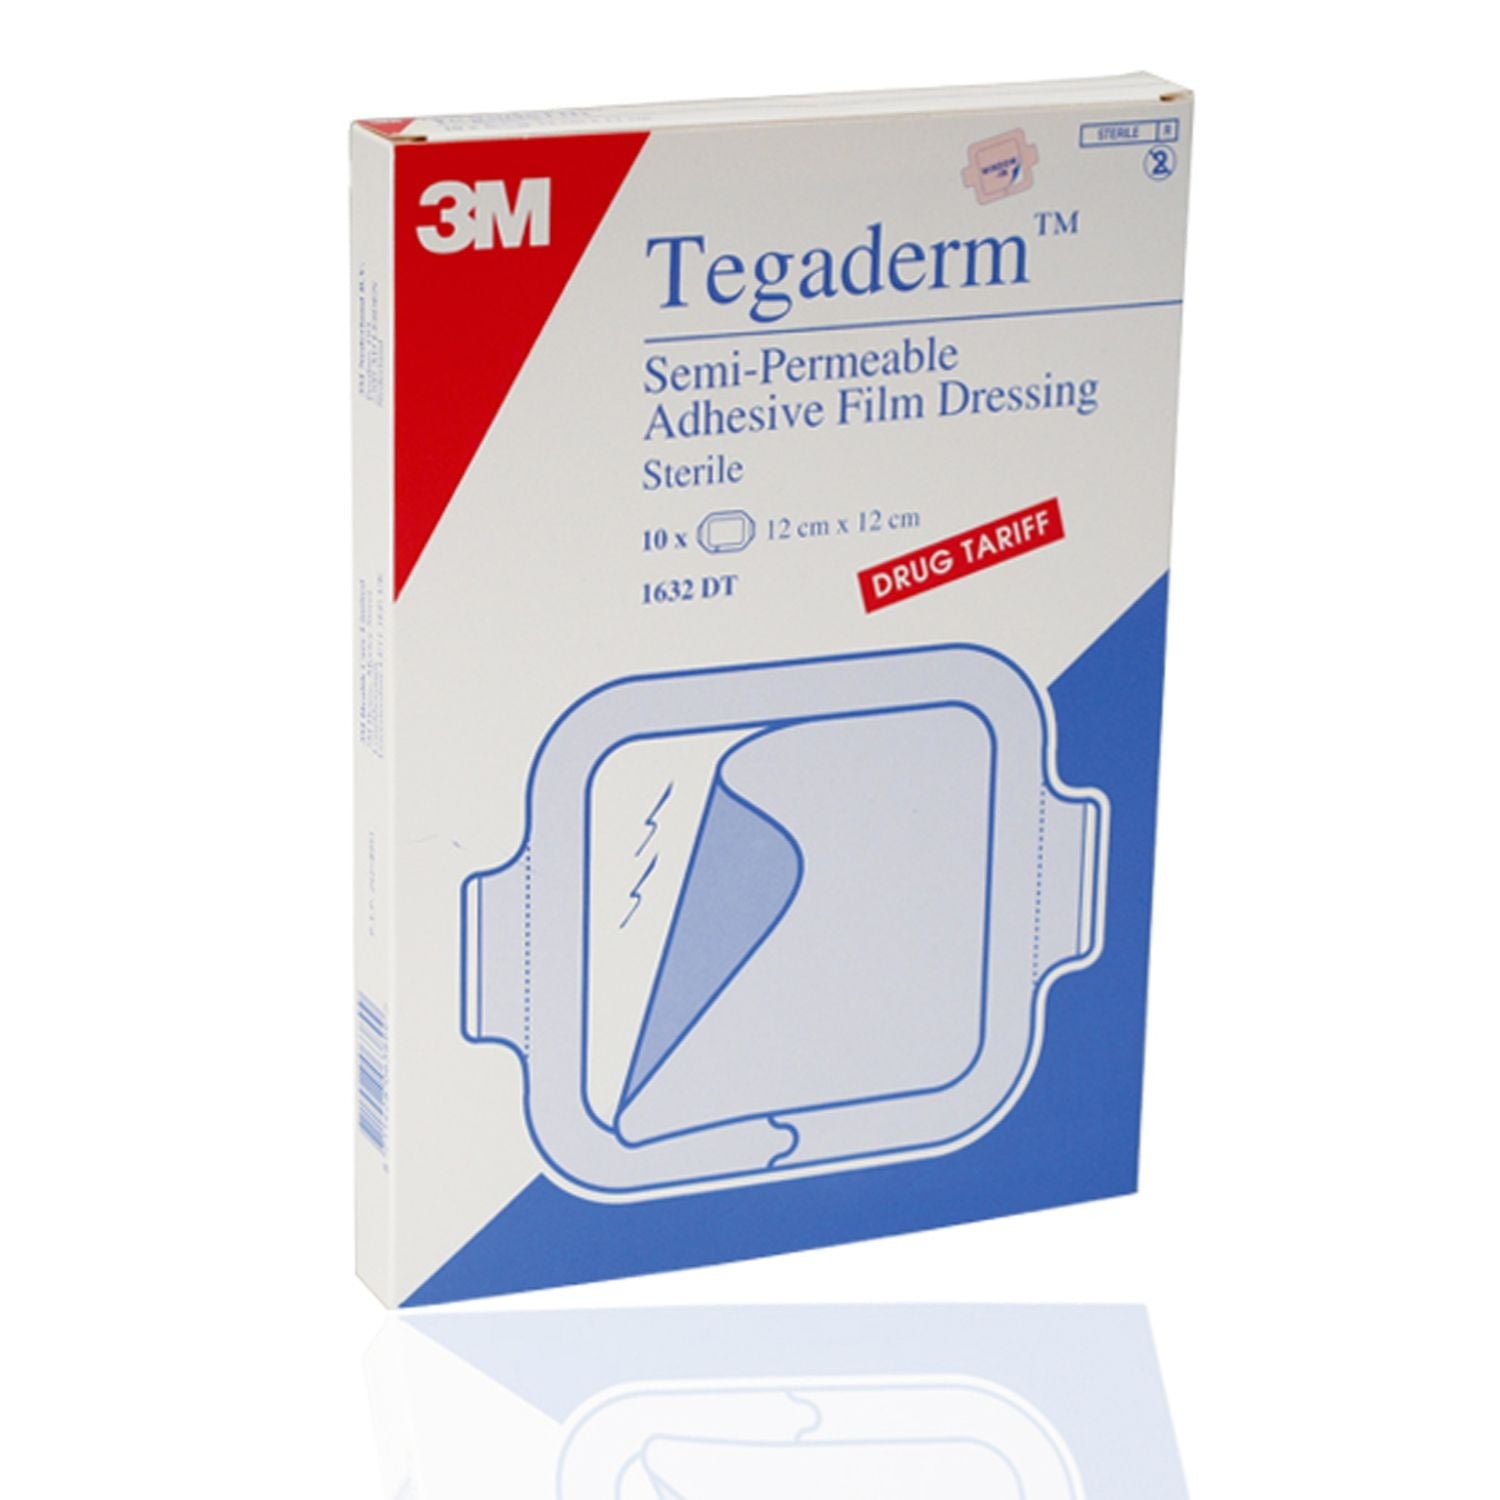 Tegaderm Film Dressing | Semi Permeable Adhesive | Sterile | 12 x 12cm | Pack of 10